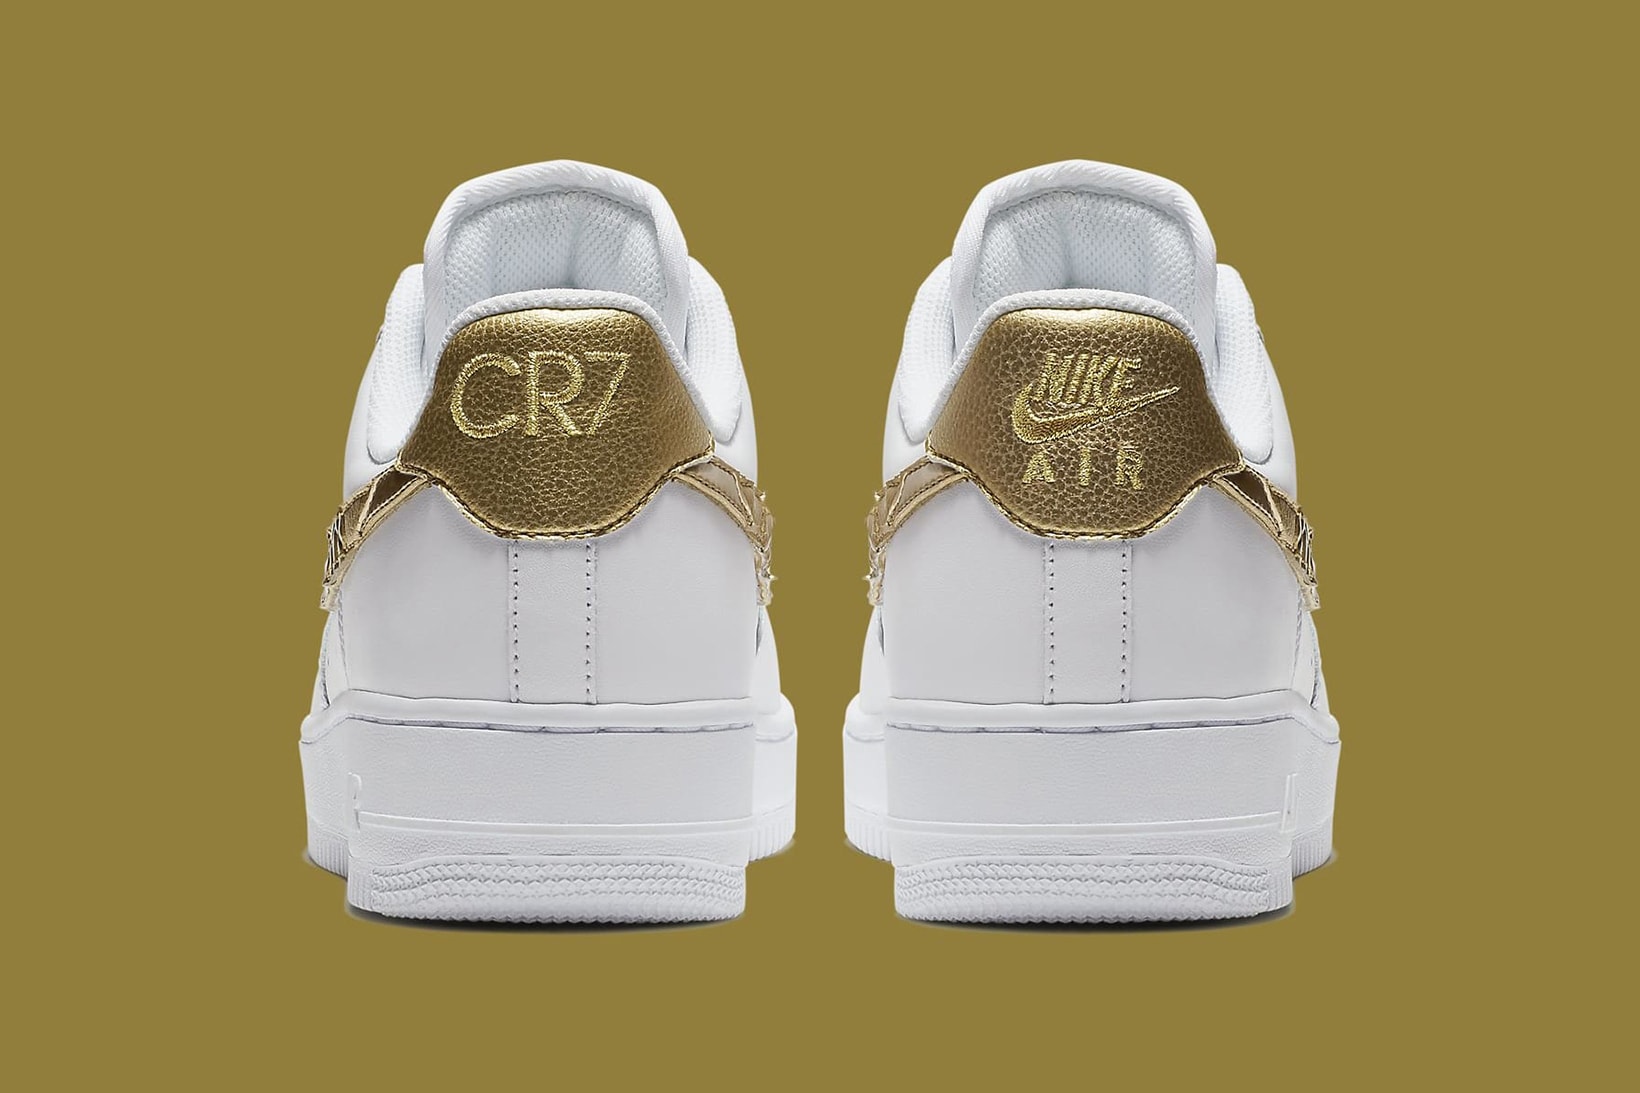 Nike Air Force 1 CR7 for Cristiano Ronaldo